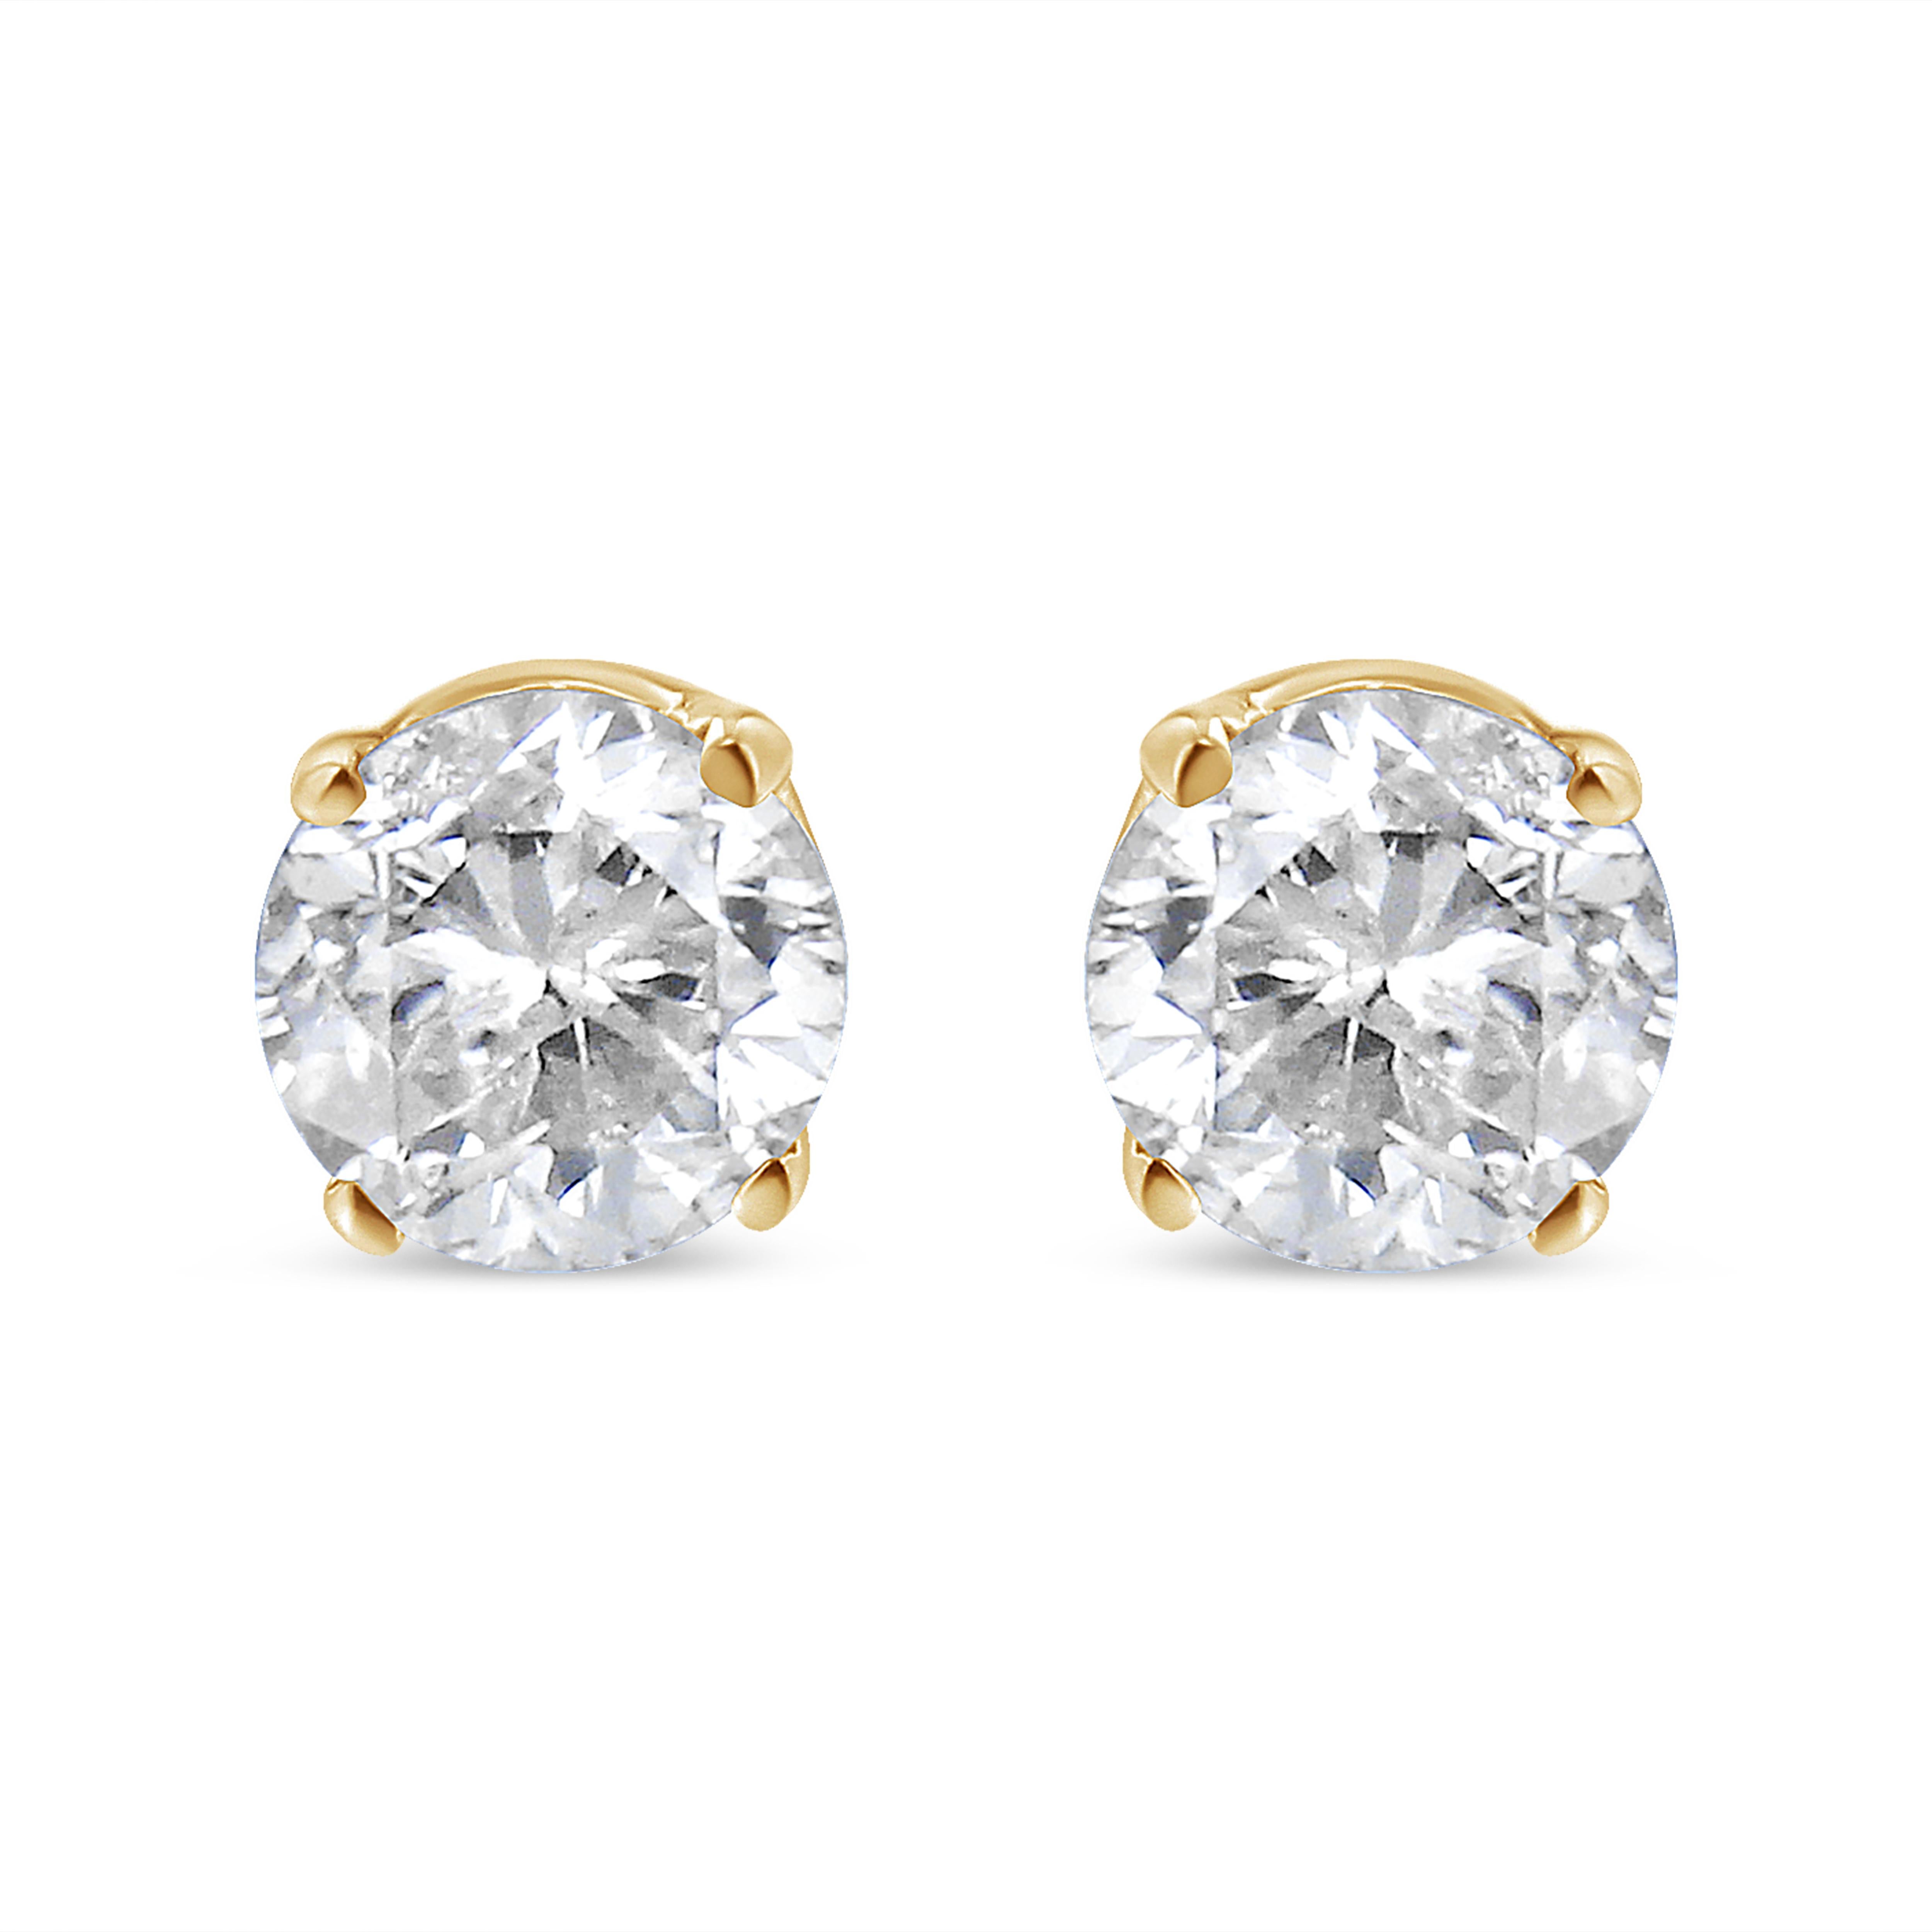 1/2 carat diamond stud earrings 14k yellow gold